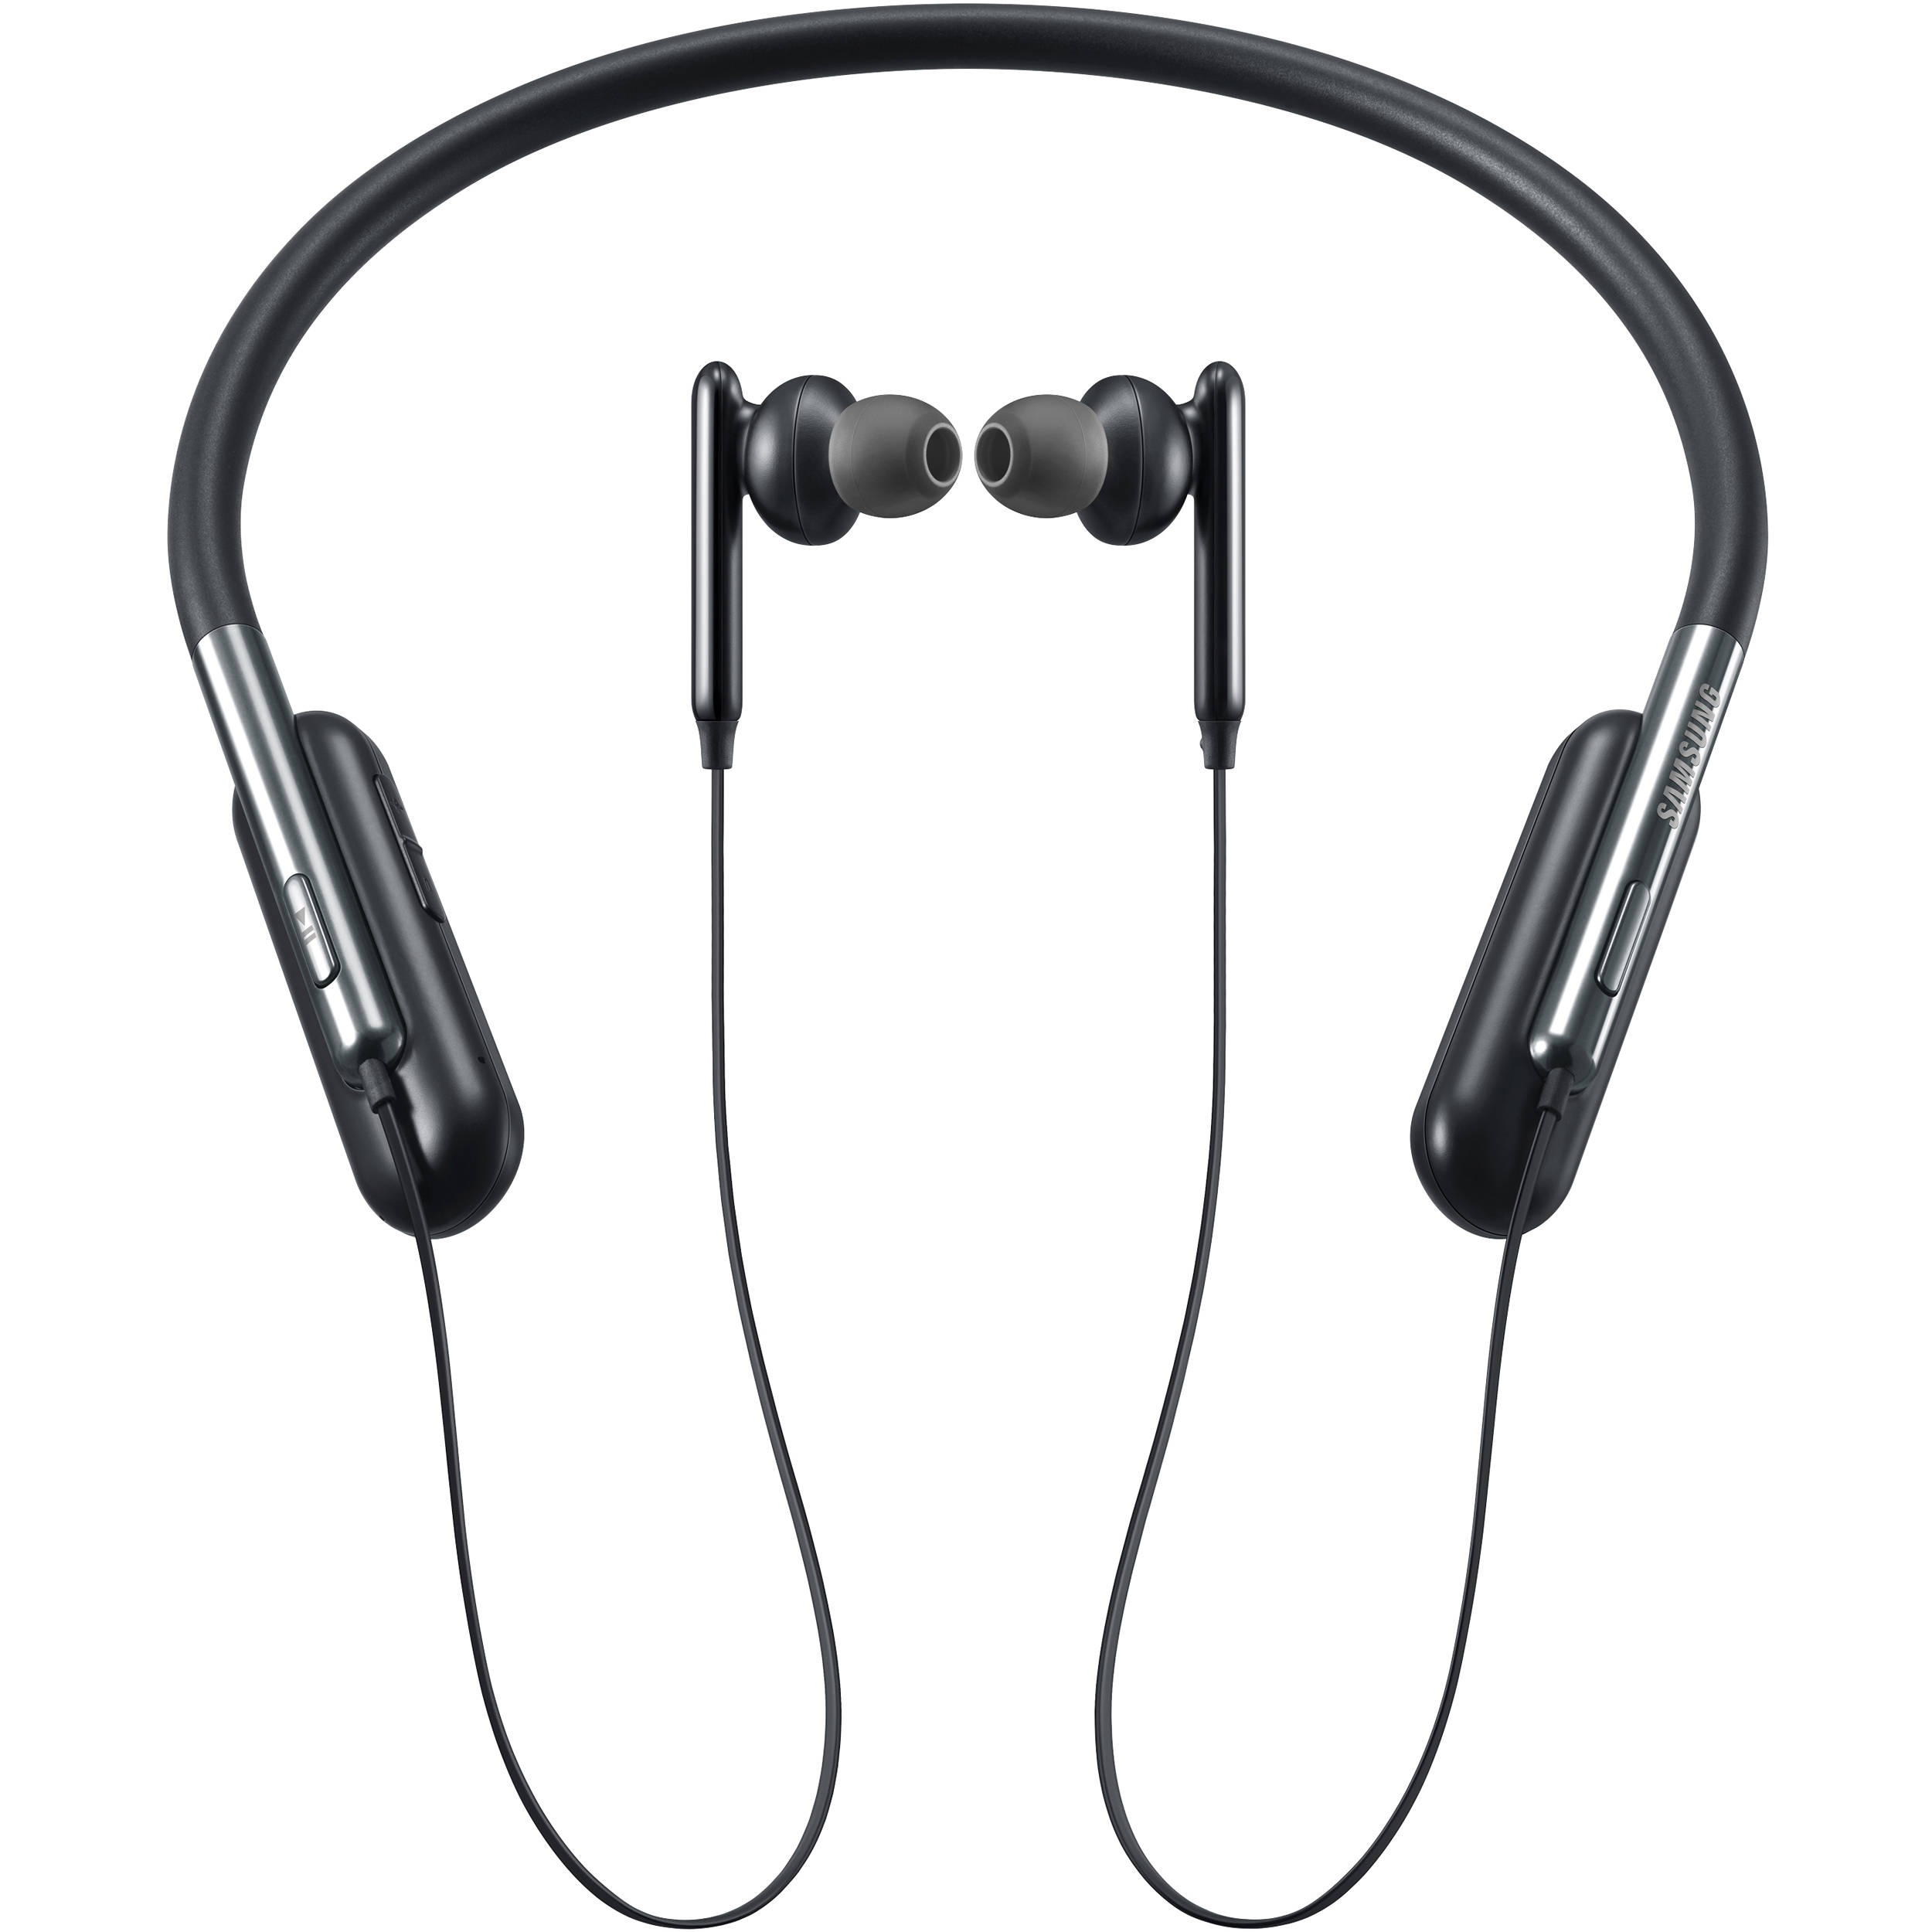 U Flex are Samsung's new bendable Bluetooth headphones